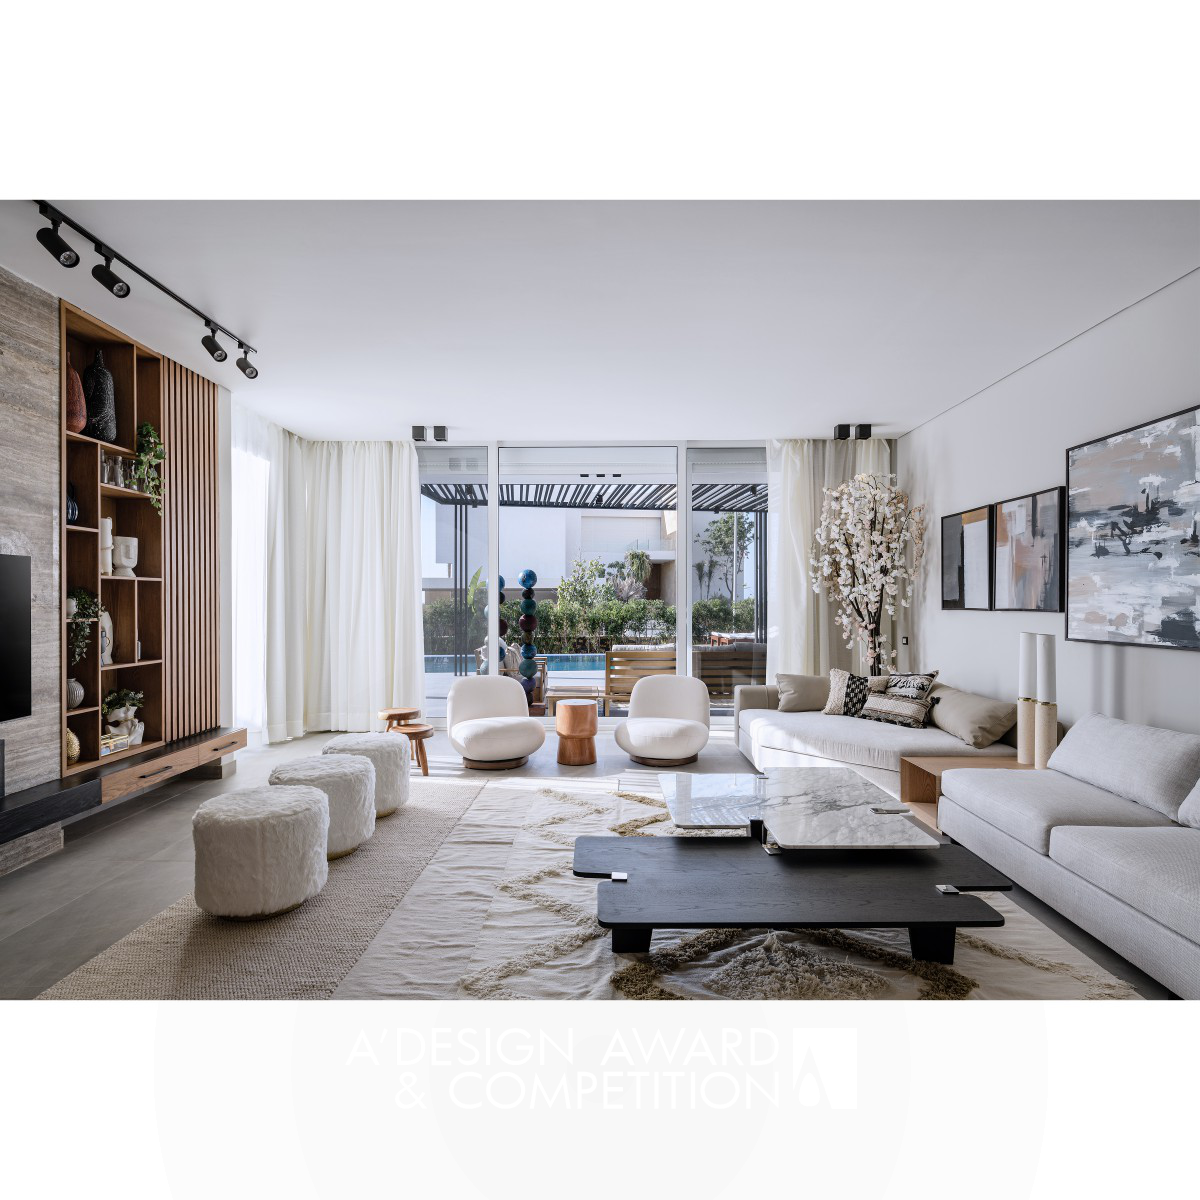 Seashell Villa Summer House by Hadeer Rashwan Silver Interior Space and Exhibition Design Award Winner 2023 